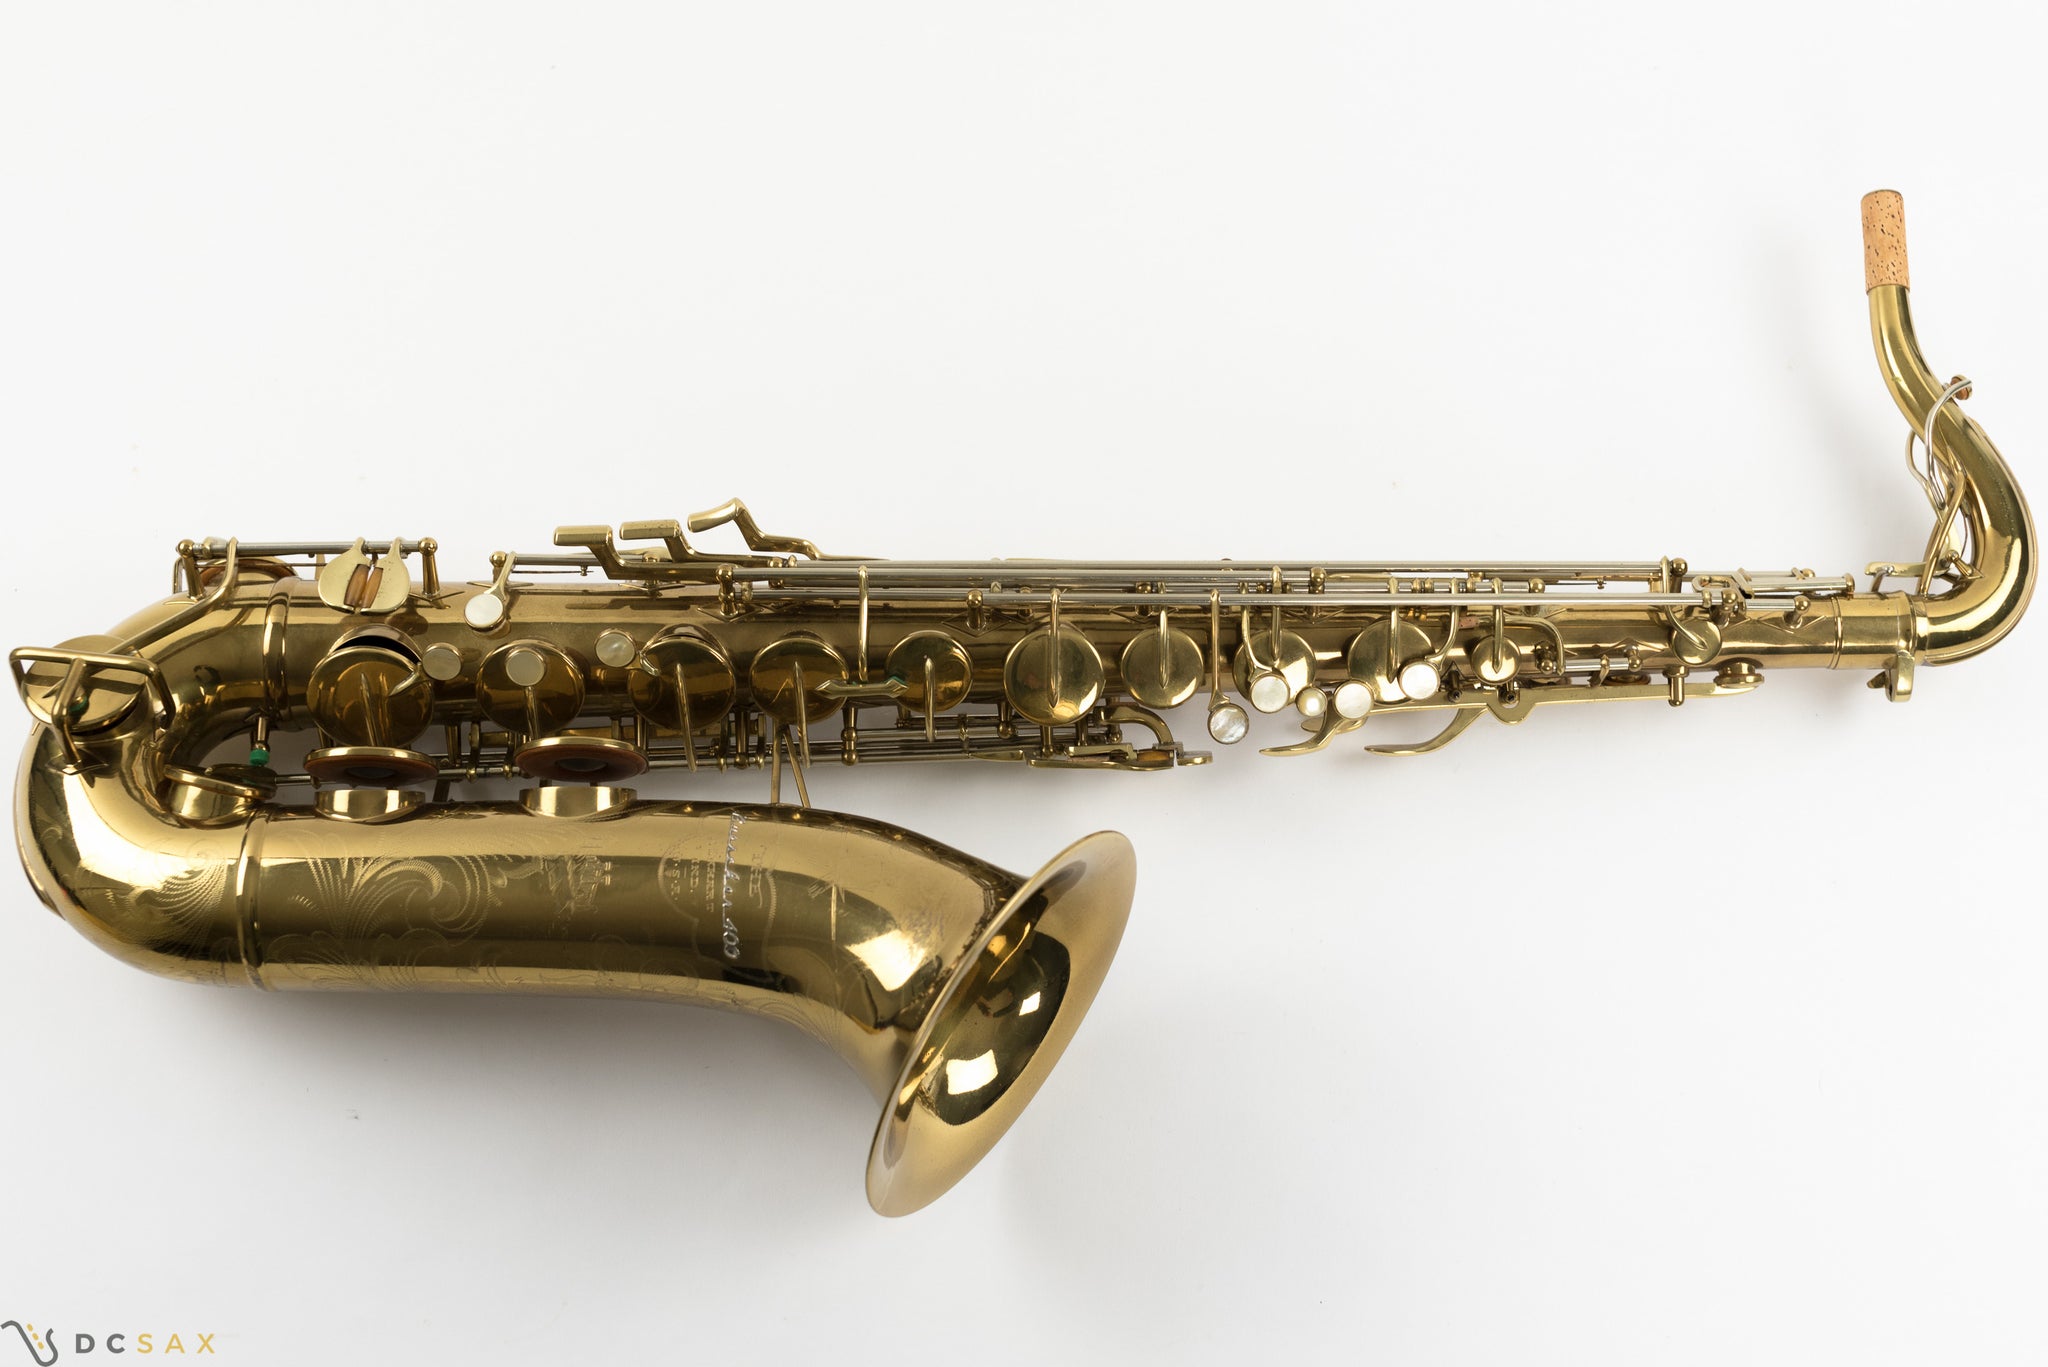 Buescher 400 Top Hat and Cane Tenor Saxophone, Near Mint, Original Lacquer